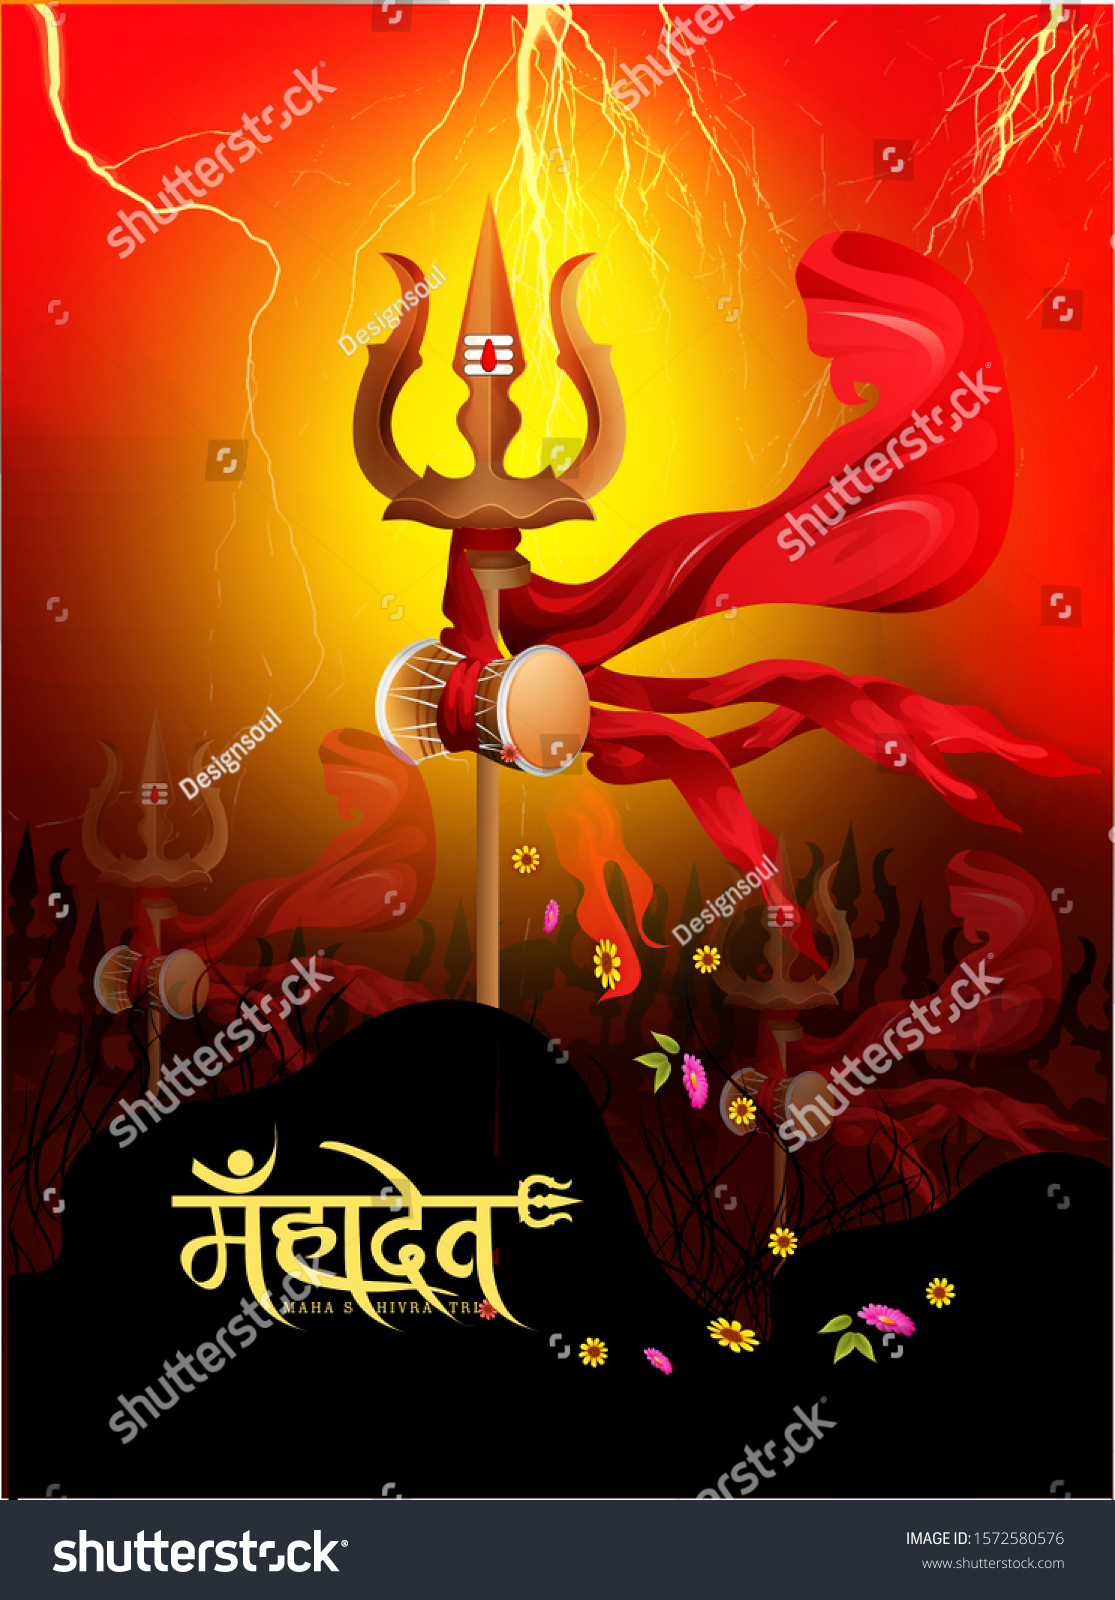 Illustration Greeting Card Maha Shivratri Hindu Stock Vector Royalty Free 1572580576 8754